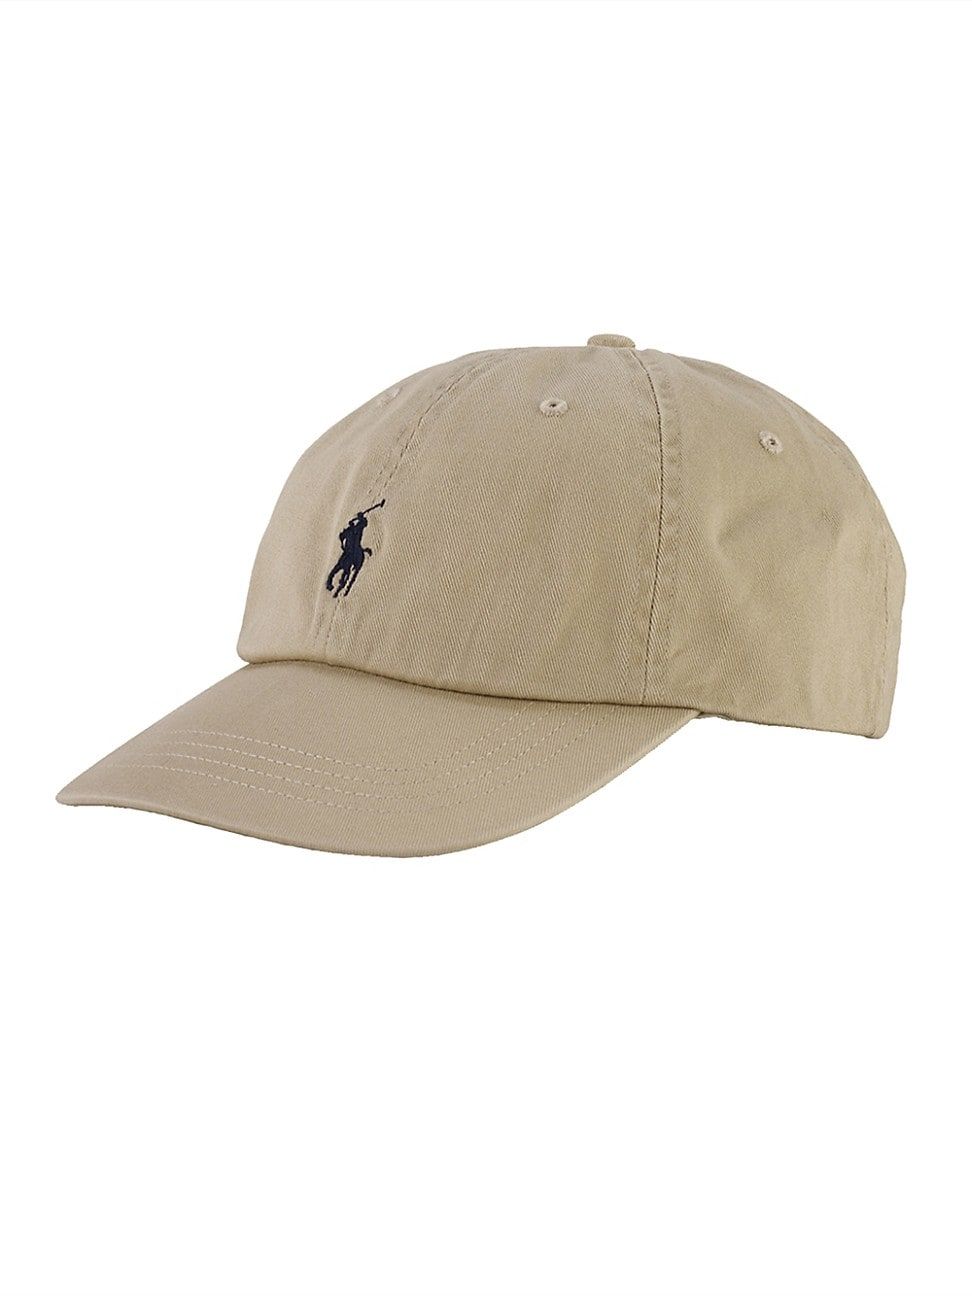 Polo Ralph Lauren Polo Player Hat | Saks Fifth Avenue